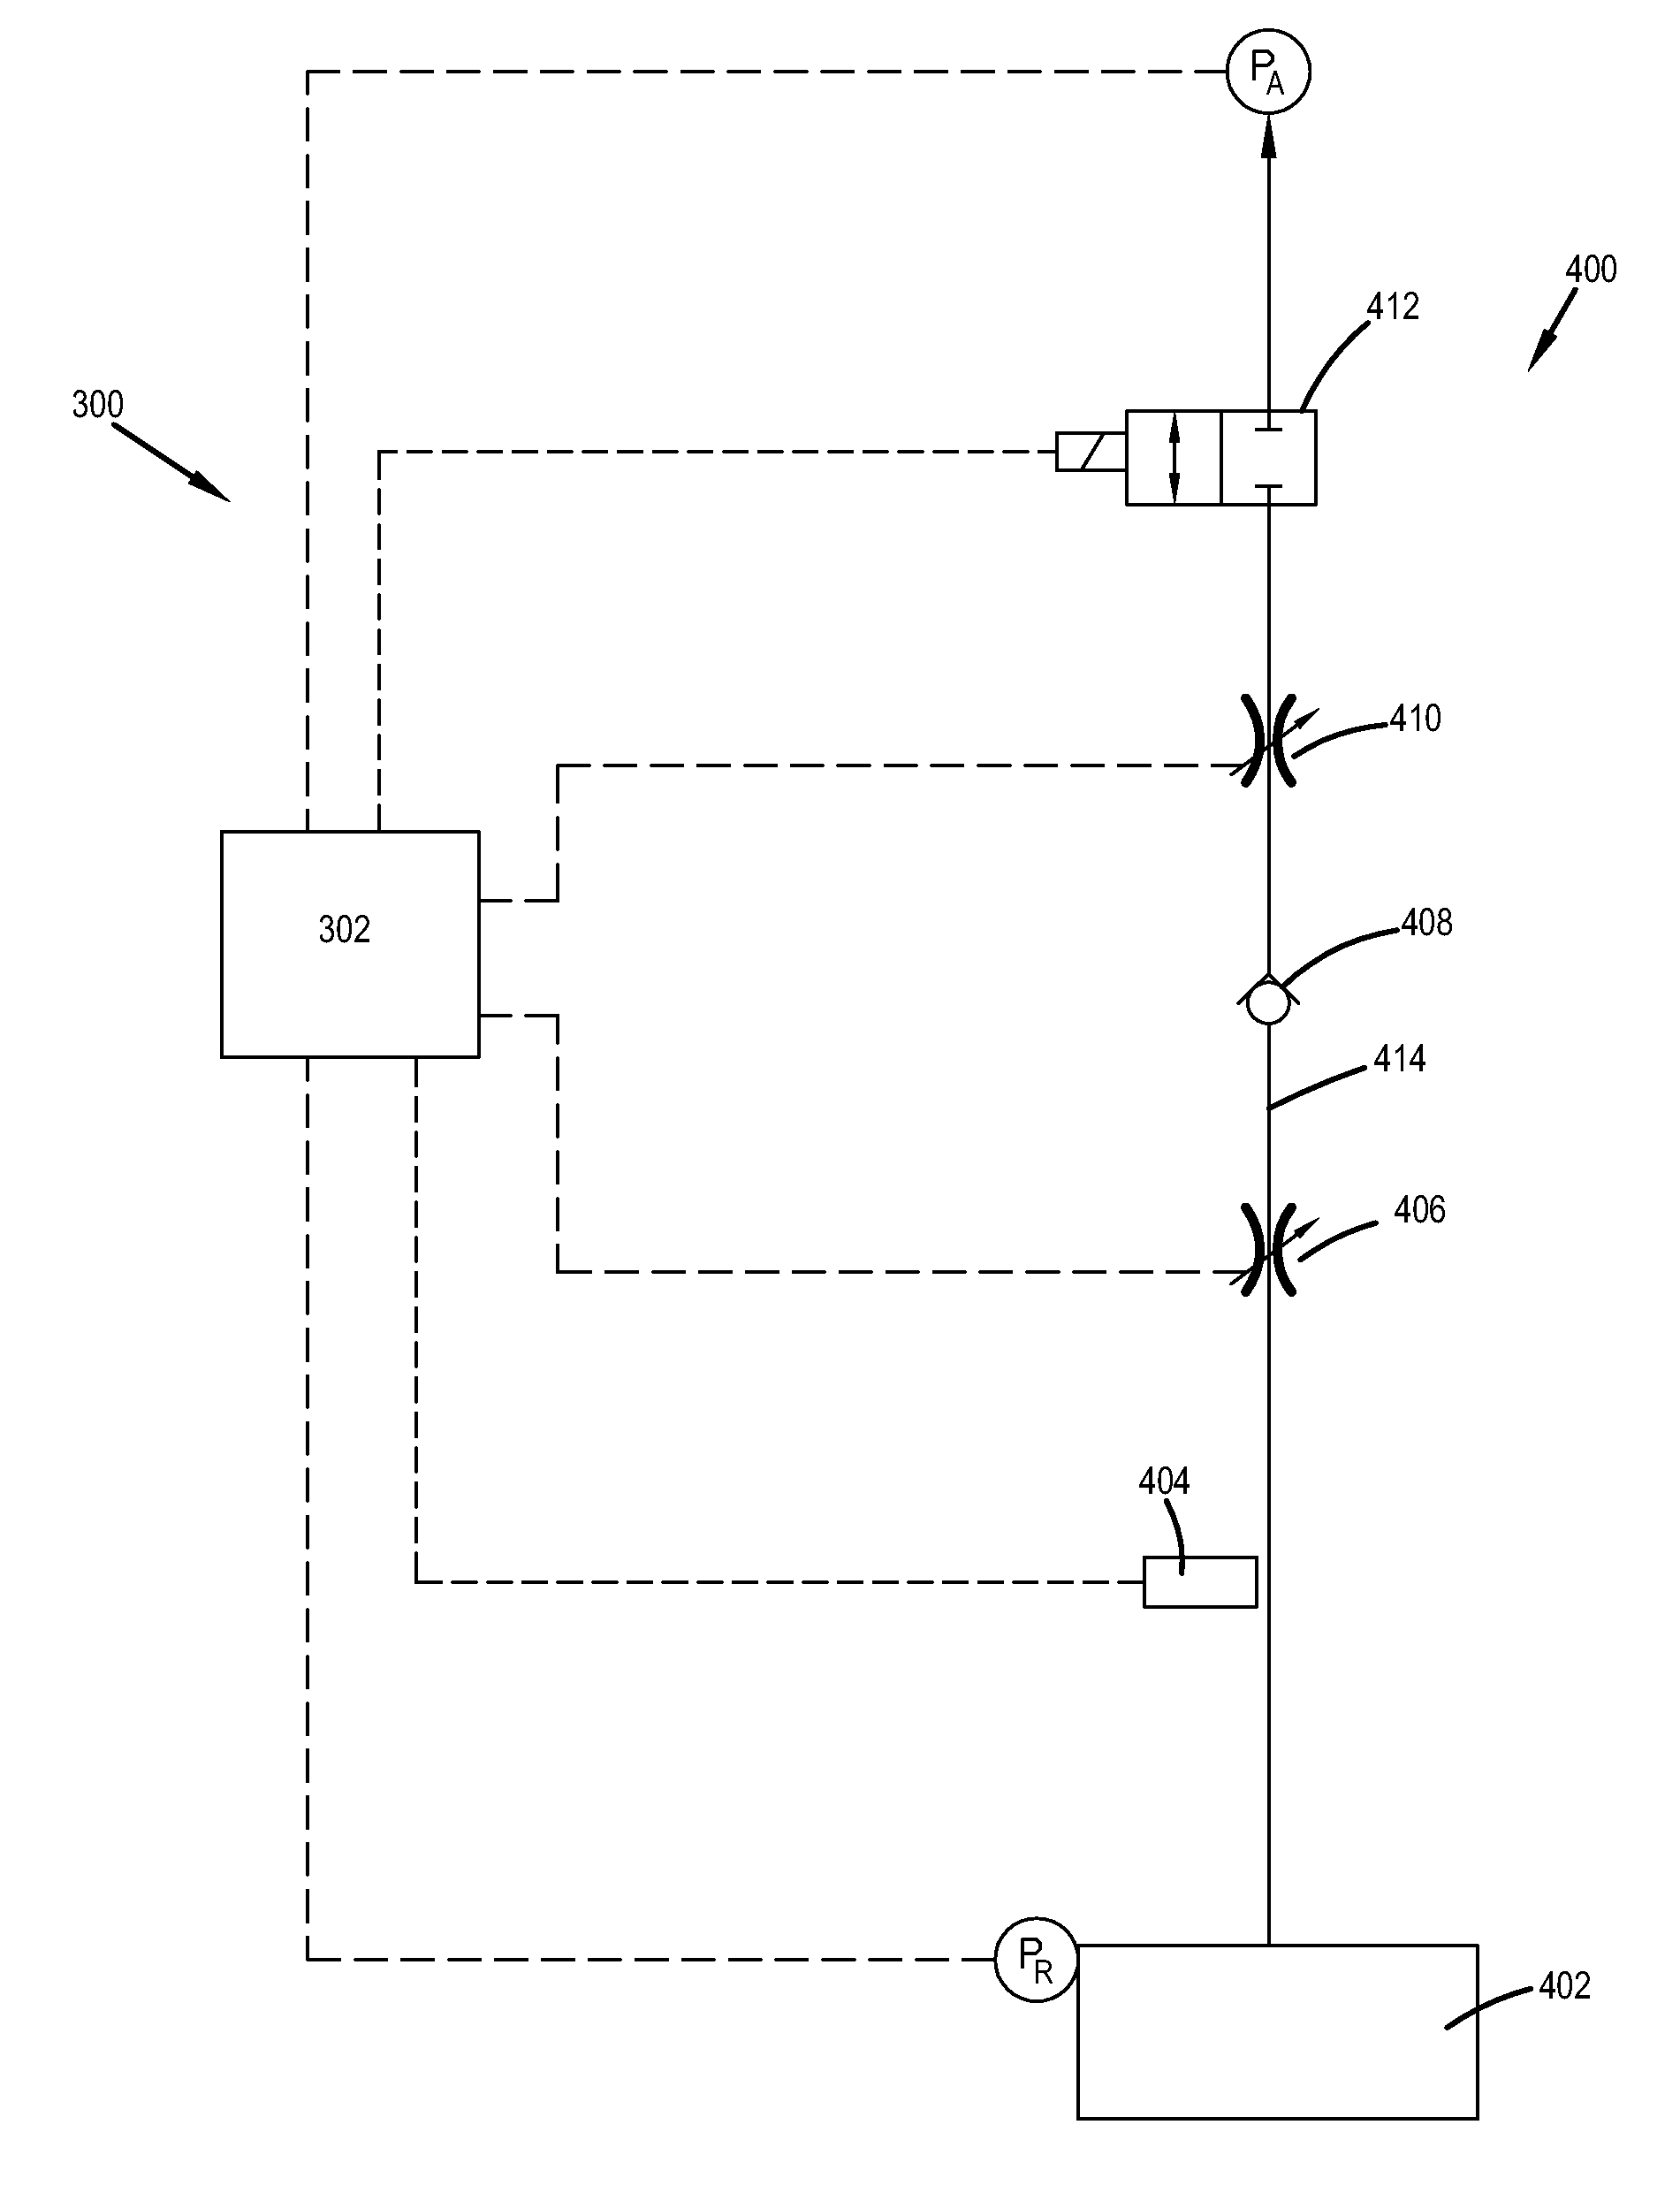 Air bleed valve float arrangement with restrictor